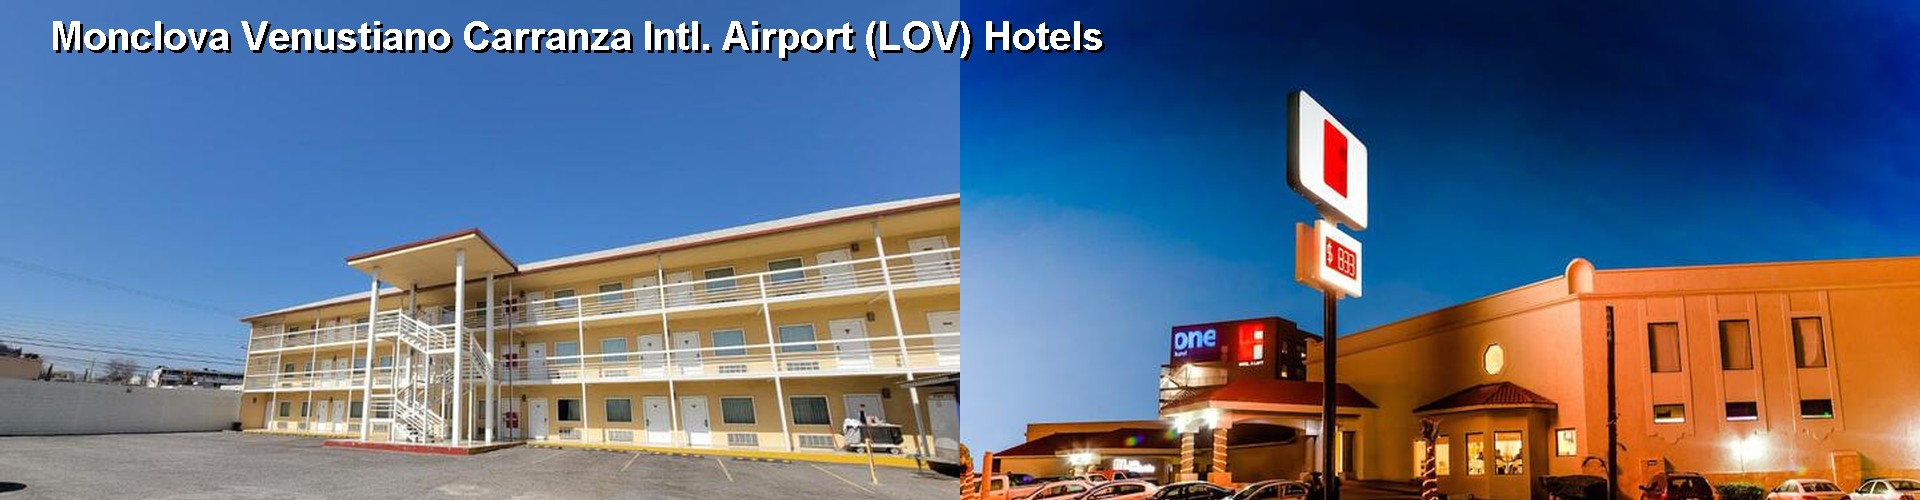 5 Best Hotels near Monclova Venustiano Carranza Intl. Airport (LOV)